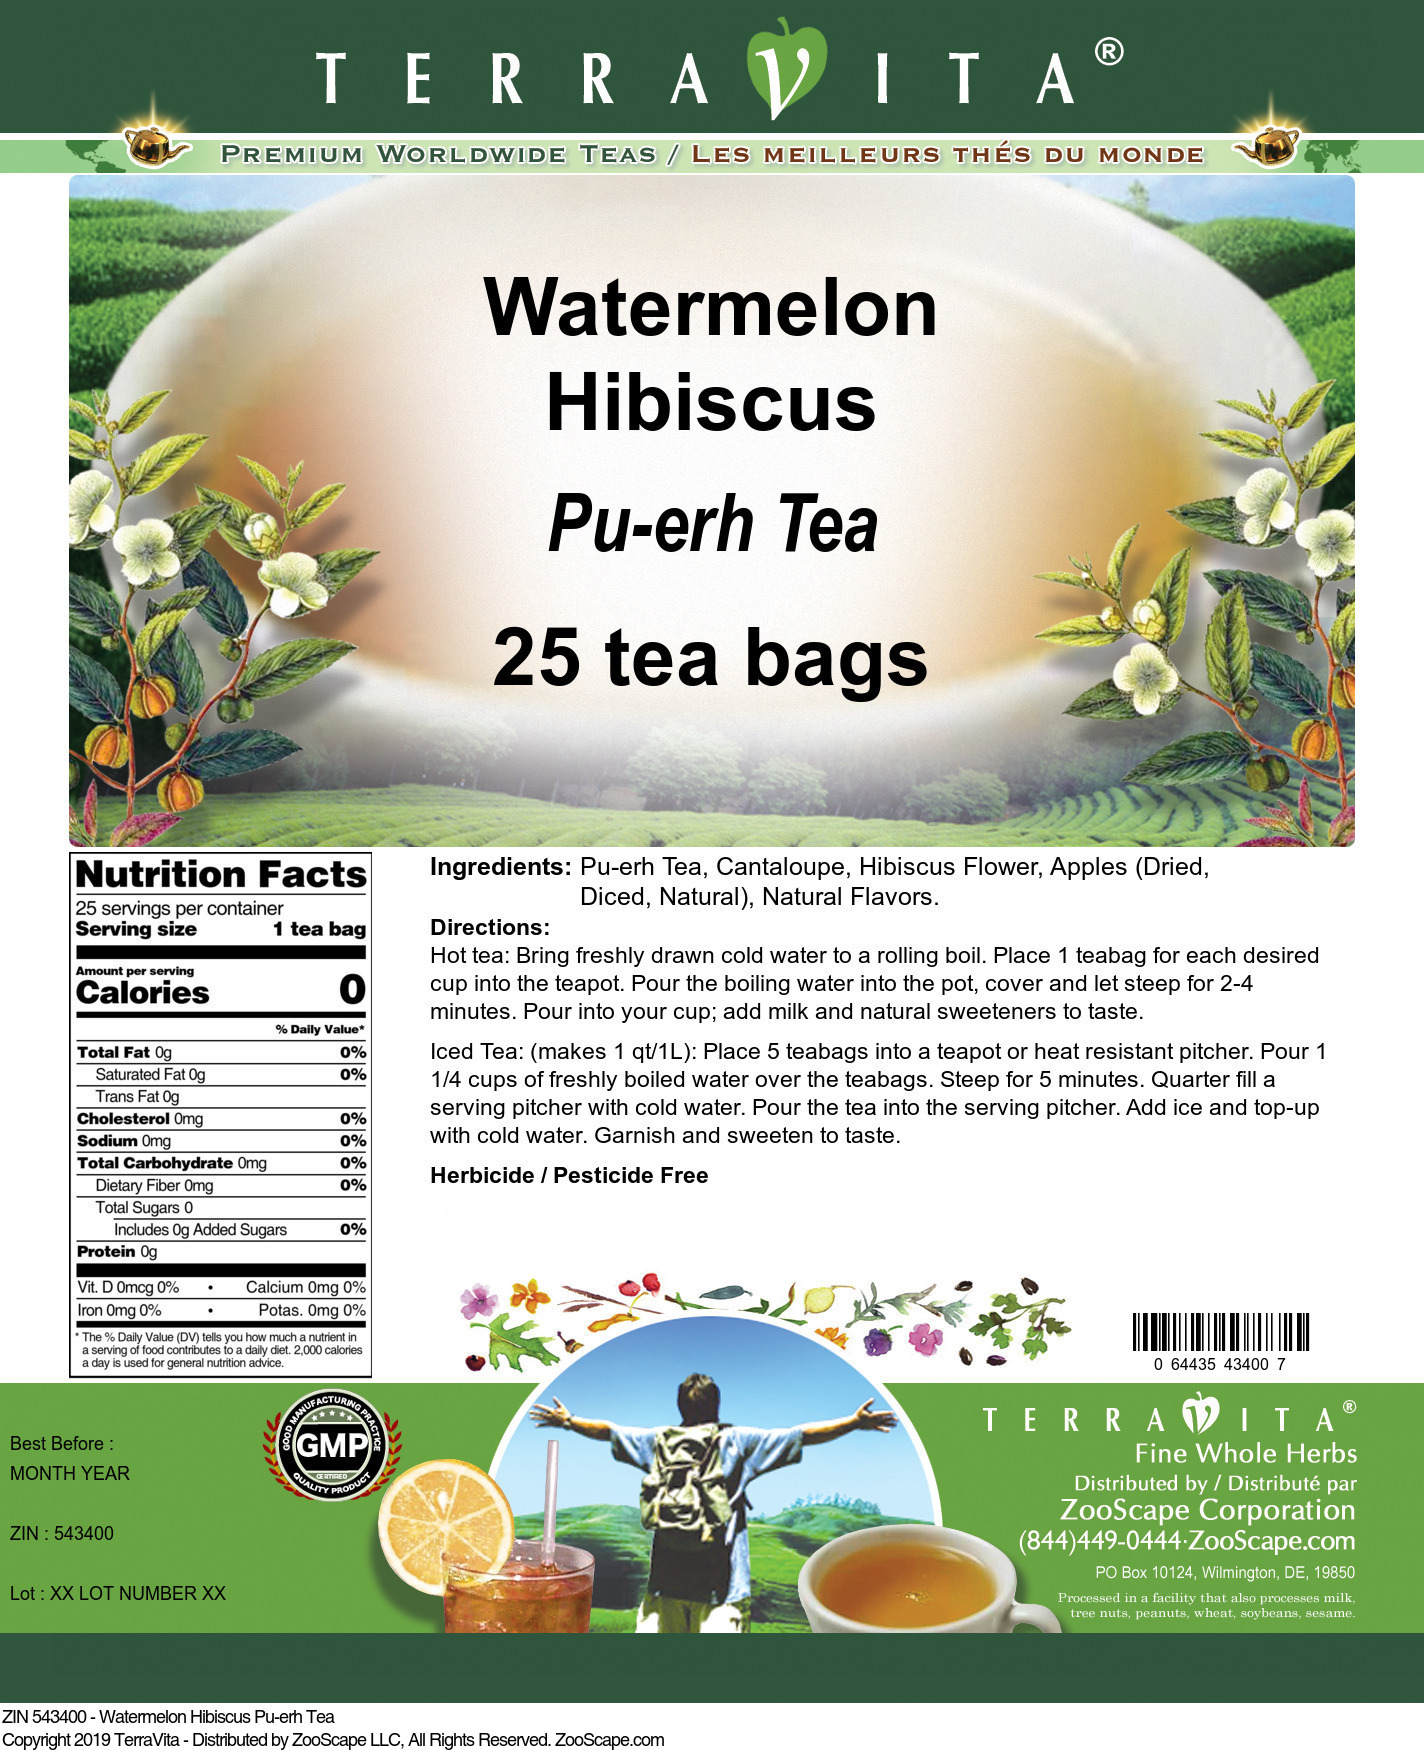 Watermelon Hibiscus Pu-erh Tea - Label